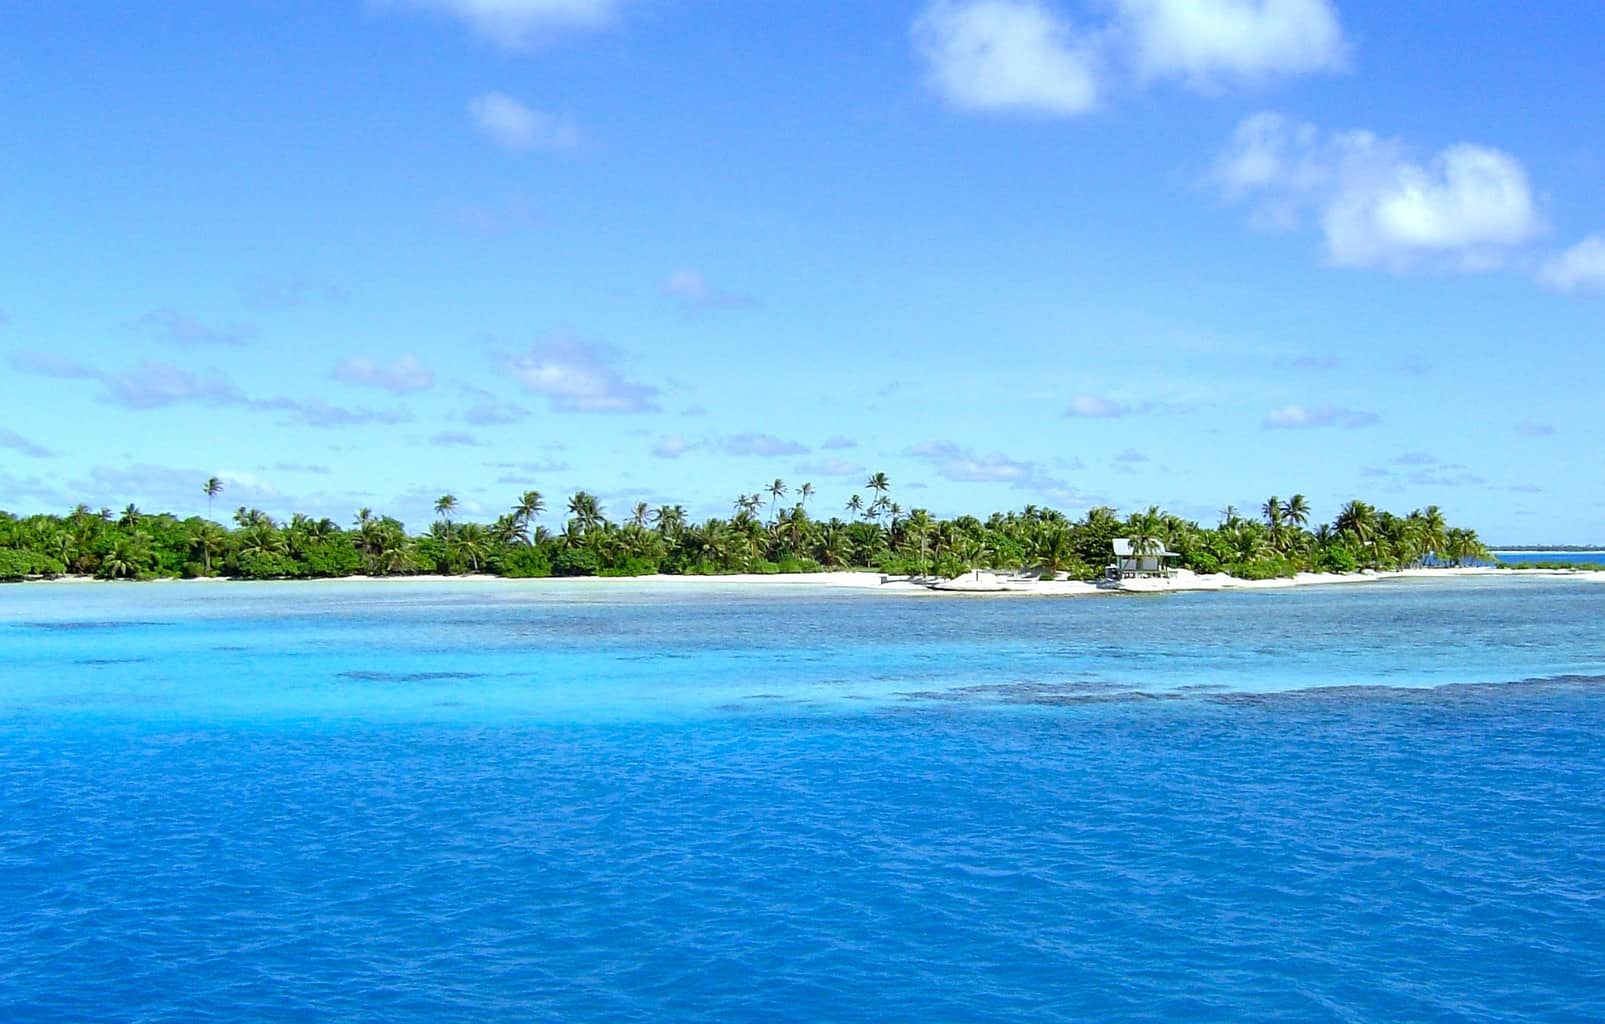 Voyage en groupe gay: Navigation à Tahiti